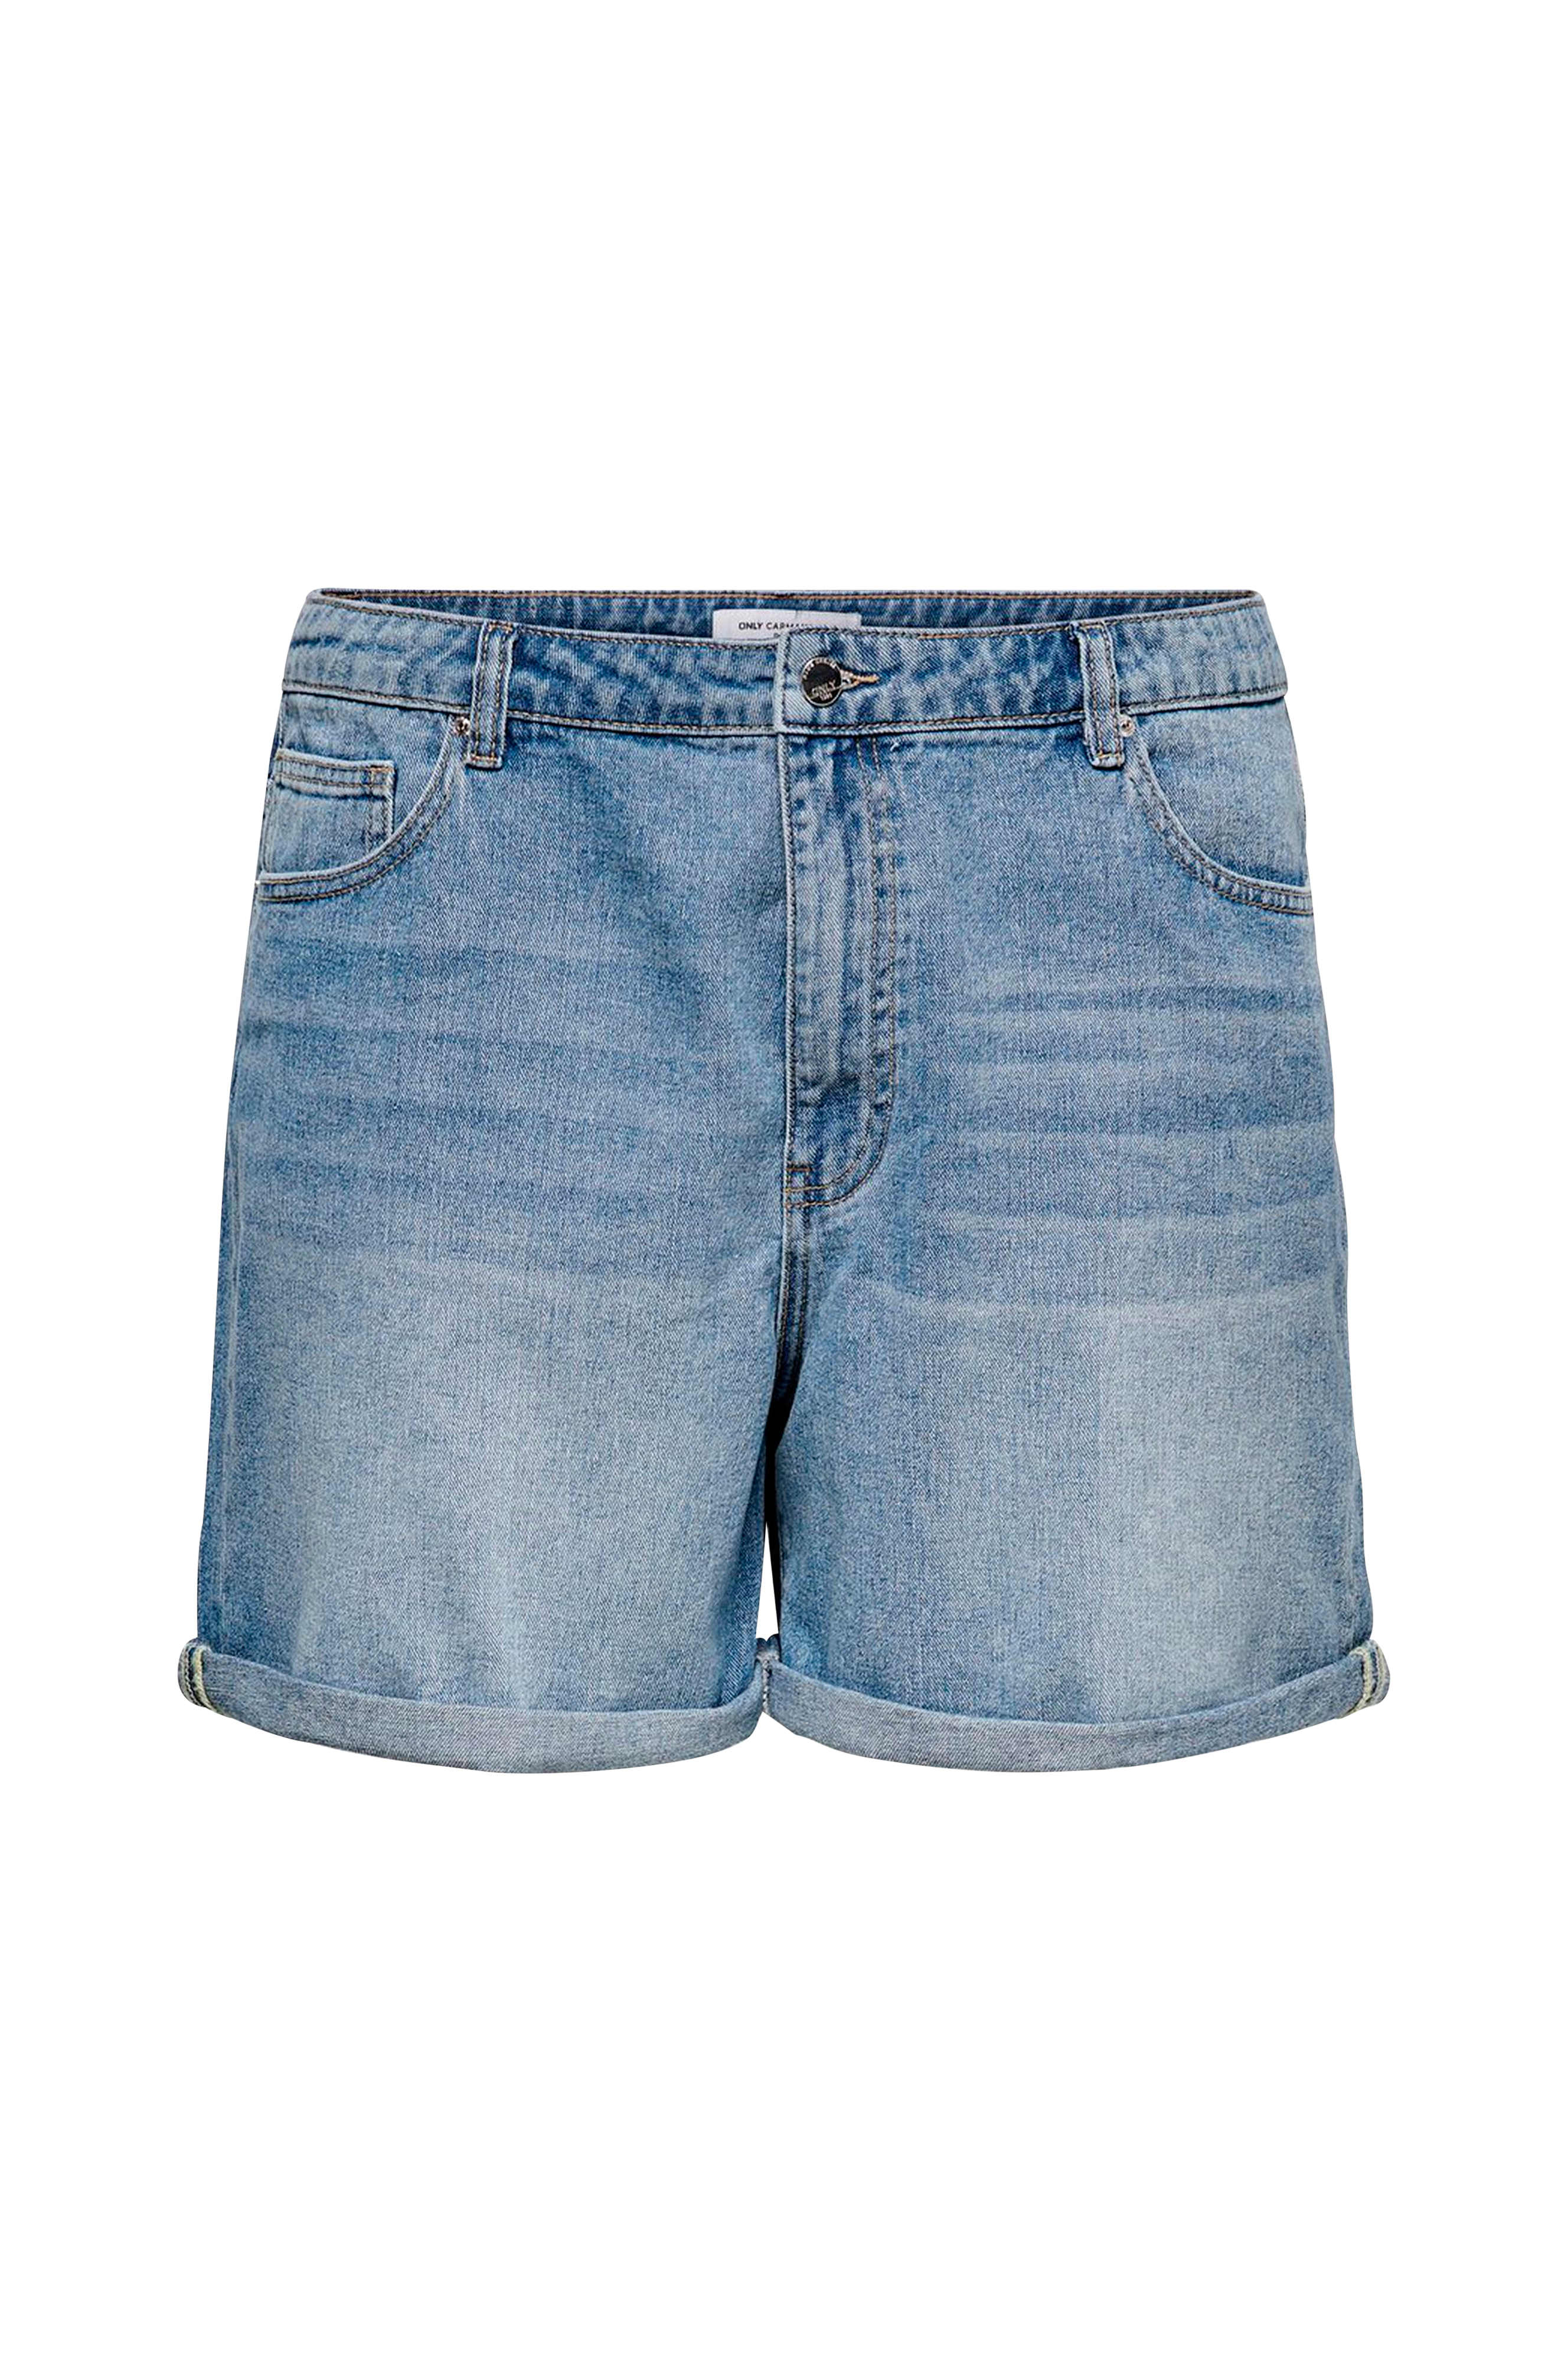 Only Carmakoma carHine - Dnm - Blå Reg Jeansshorts Jeans-shorts Shorts